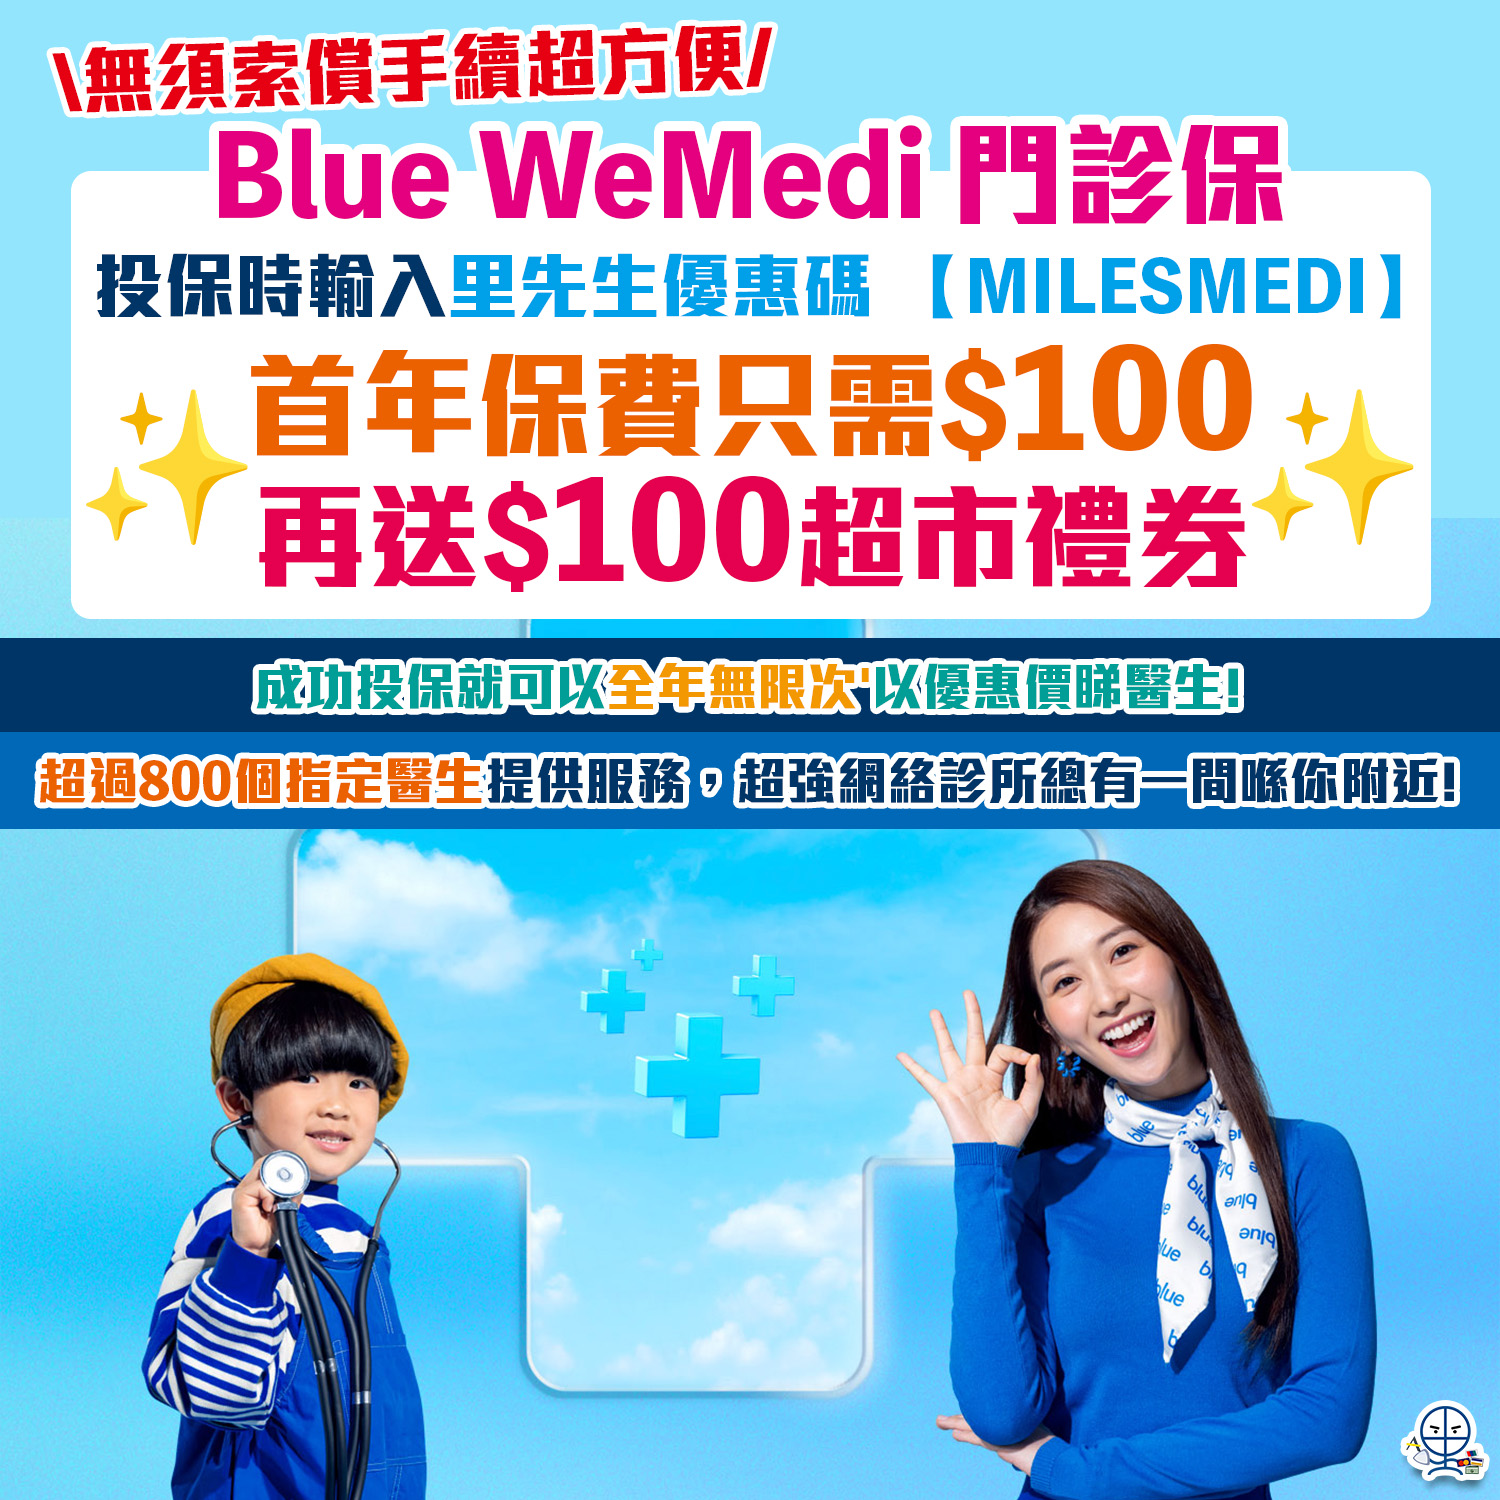 【Blue WeMedi門診保】輸入里先生優惠碼「MILESMEDI」首年只需HK$100保費，再送HK$100超市禮券！全年無限次以優惠價睇醫生！連專科、中醫、牙科都有份！